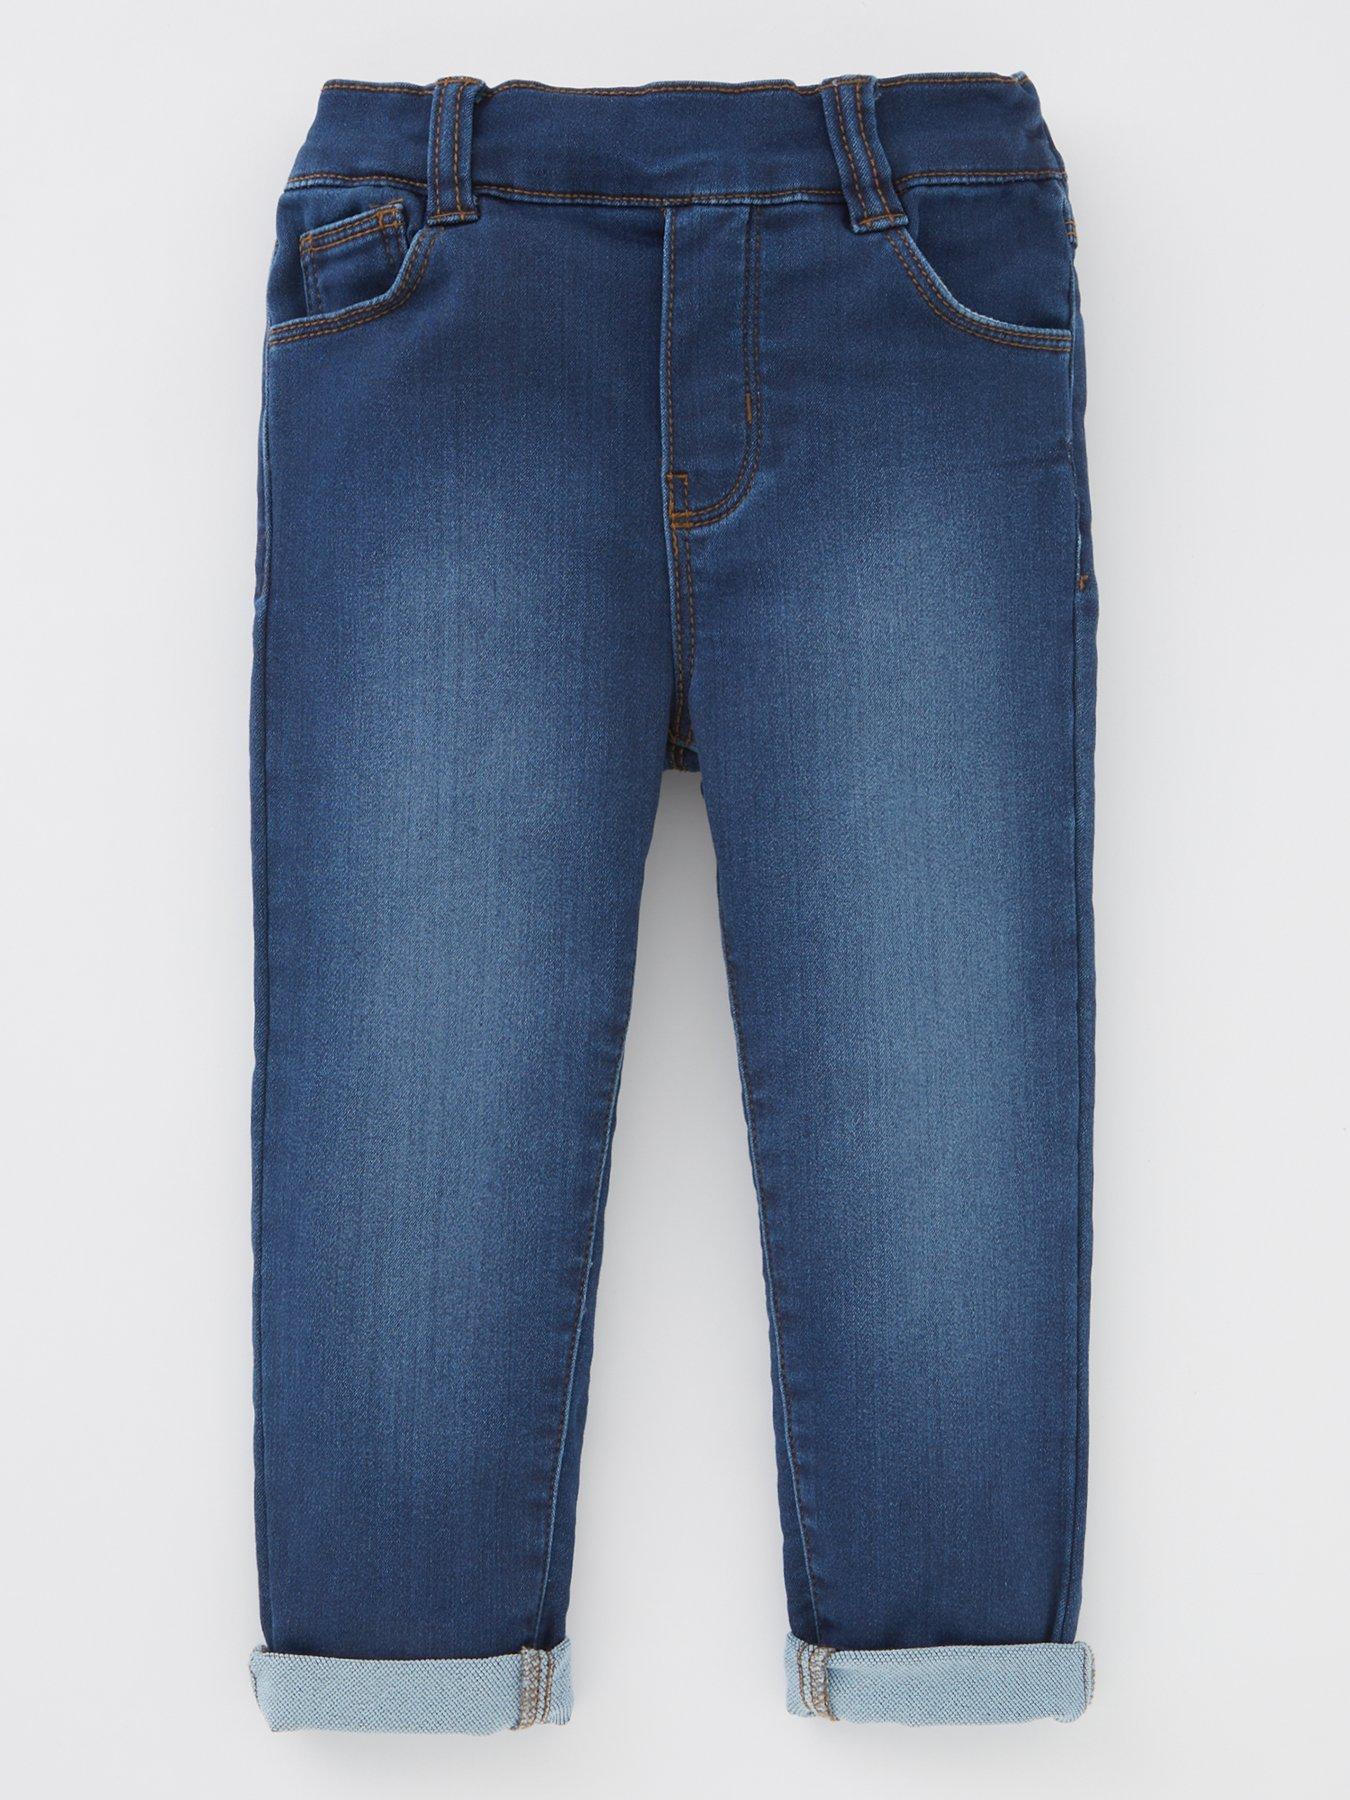 1826 Women's Premium Plus Size Dark Blue/Black Denim Jeans Short Stretch  Ps-481 (14, black) at  Women's Jeans store